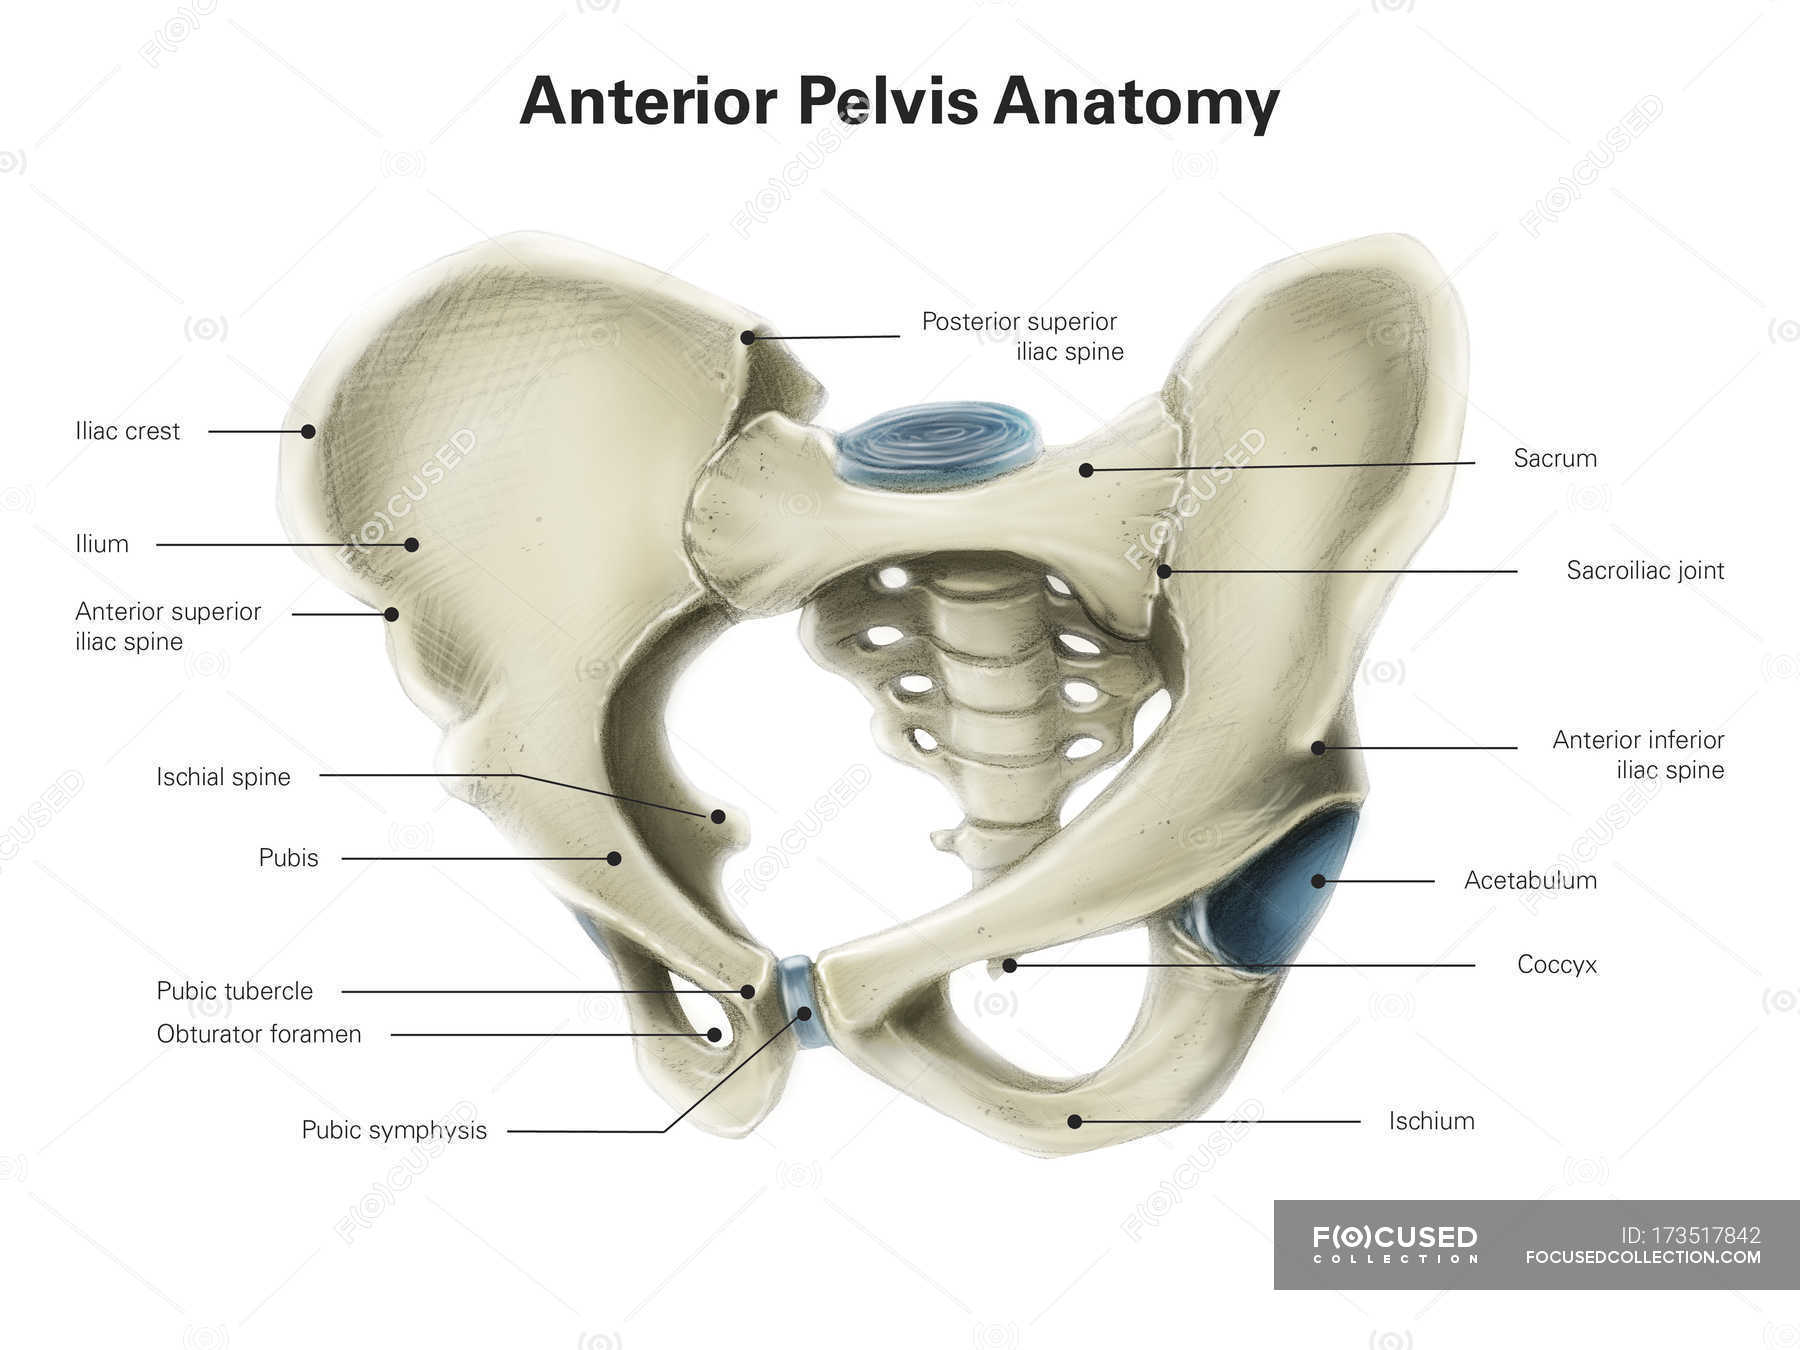 Anterior view of human pelvis — biology, human body parts - Stock Photo